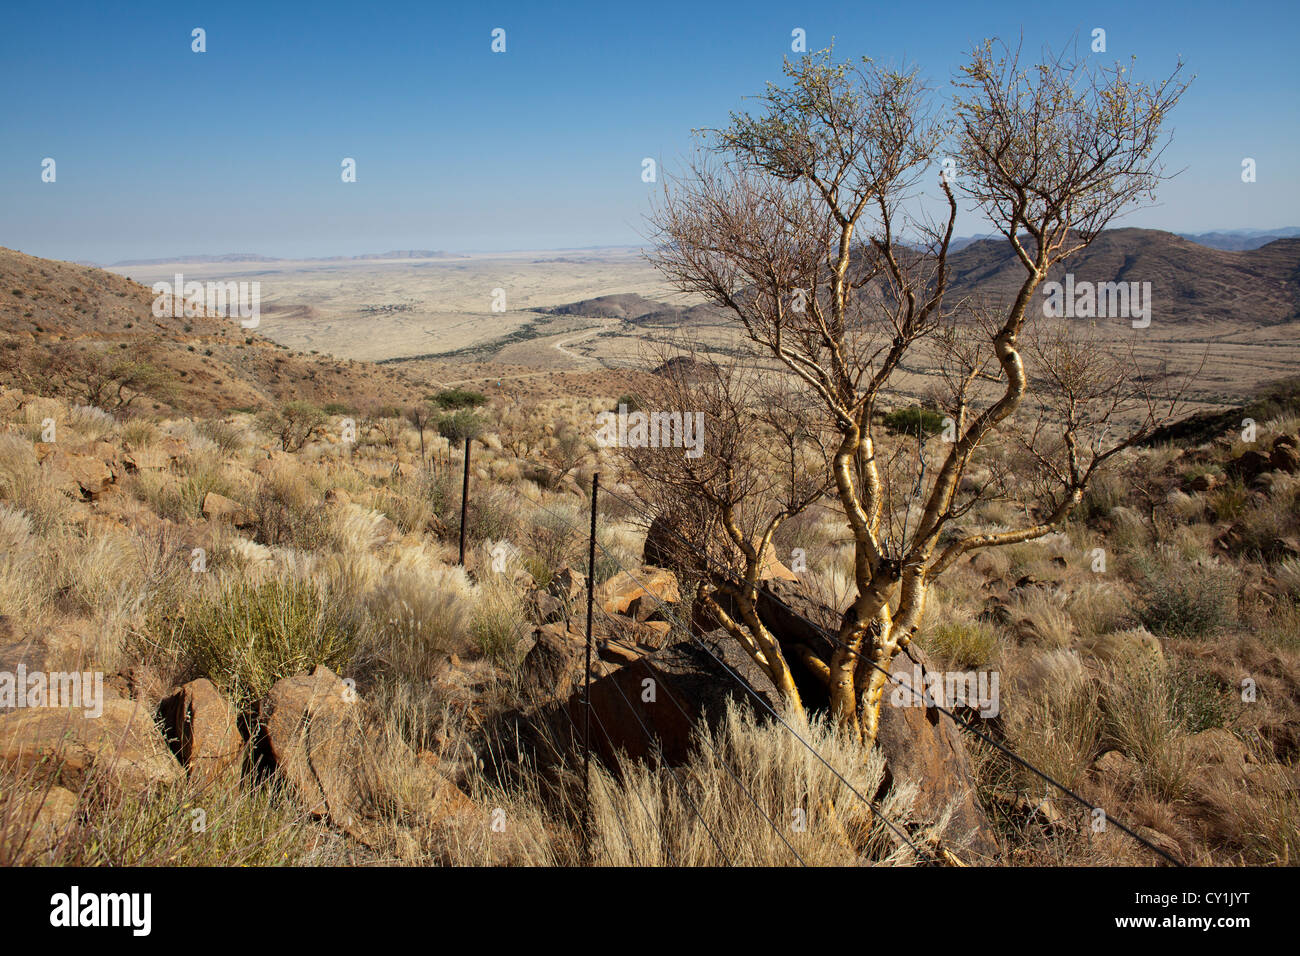 Vista, a sud di windhoek sul modo per solitair Foto Stock